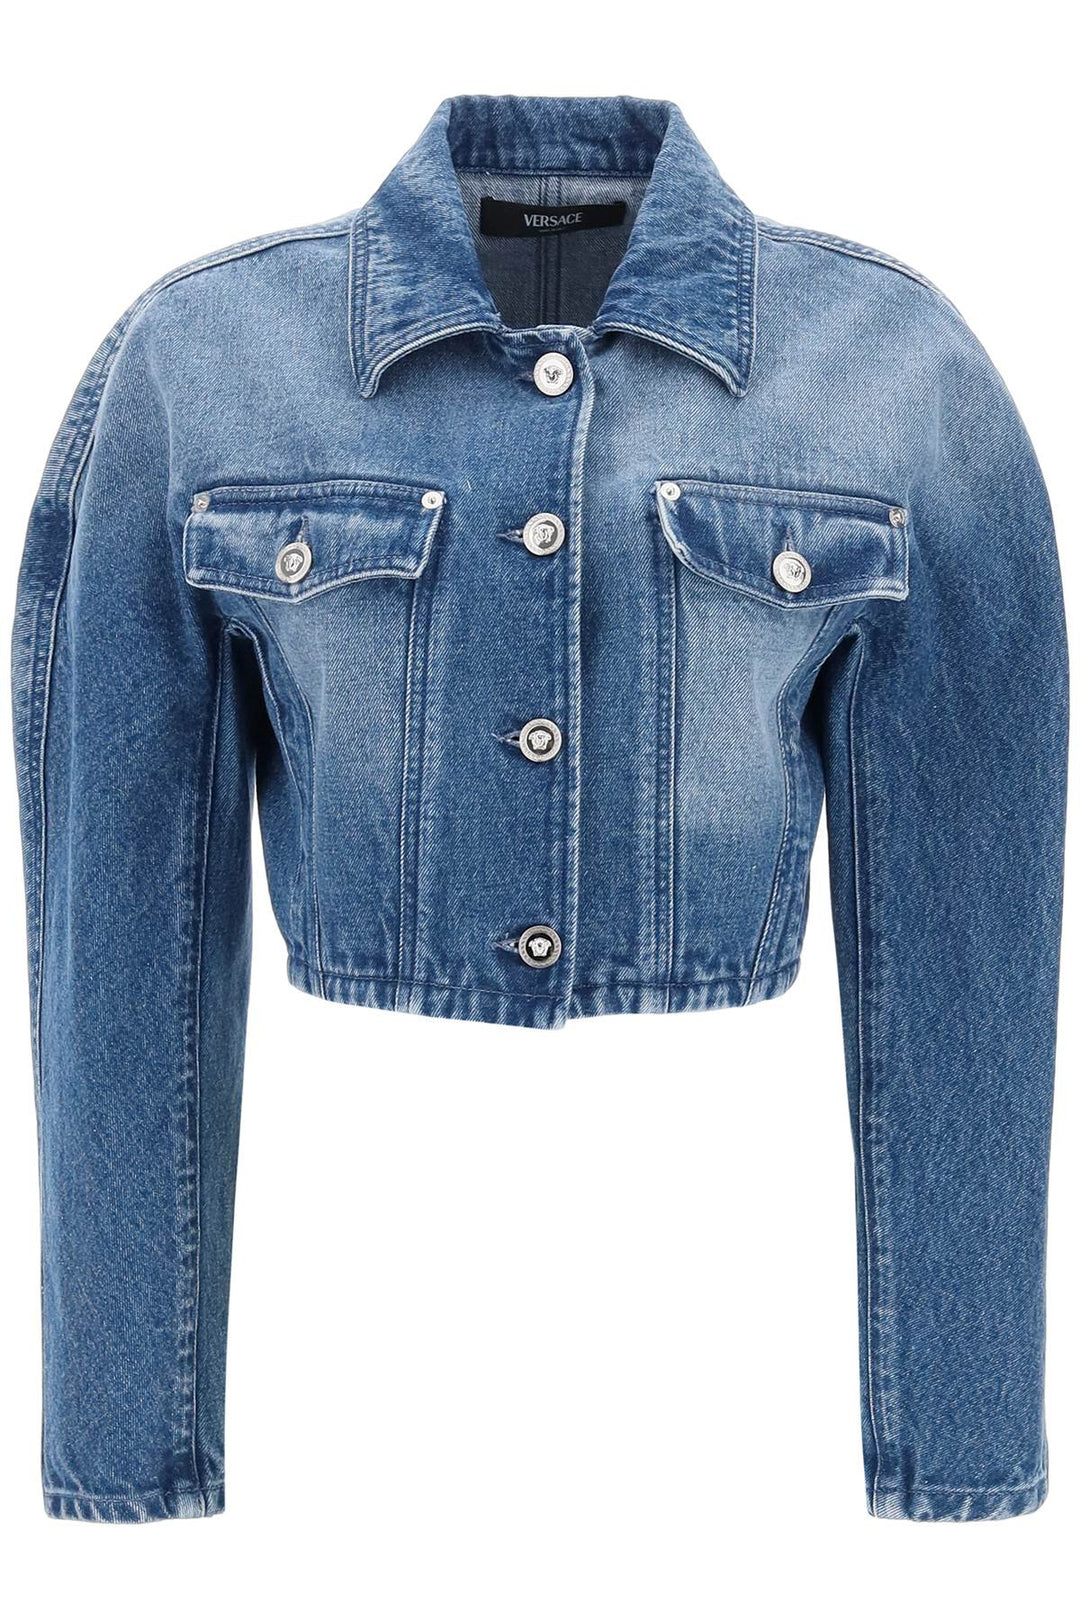 Versace Cropped Denim Jacket   Blu